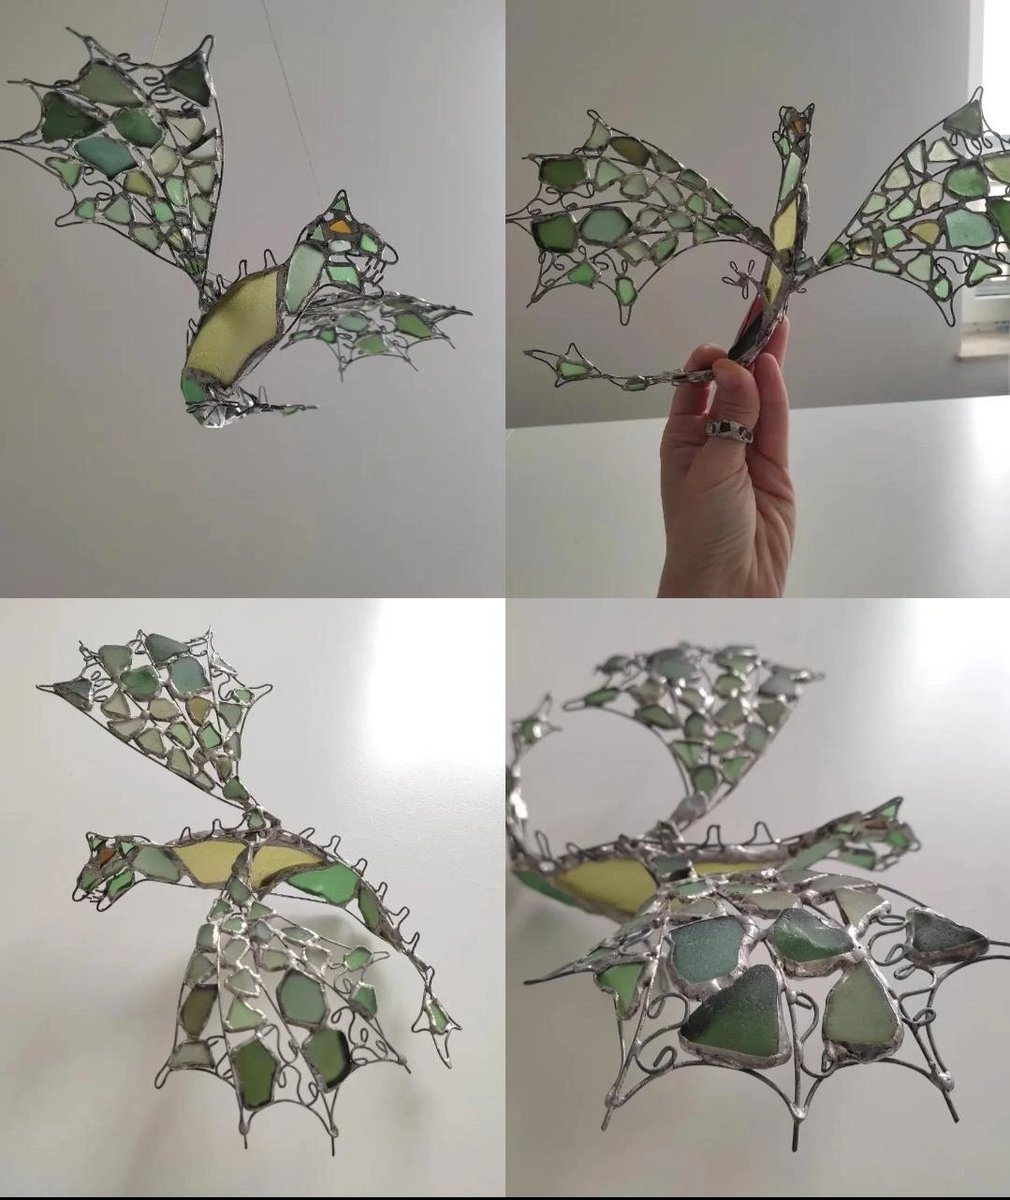 Sea glass dragon 🐉 #SeaStainedGlass #stainedglass #glassart #stainedglassart #handmade #art #seaglassart #seaglass #trashtotreasure #recycledart #trashart #recycle #upcycled #dragon